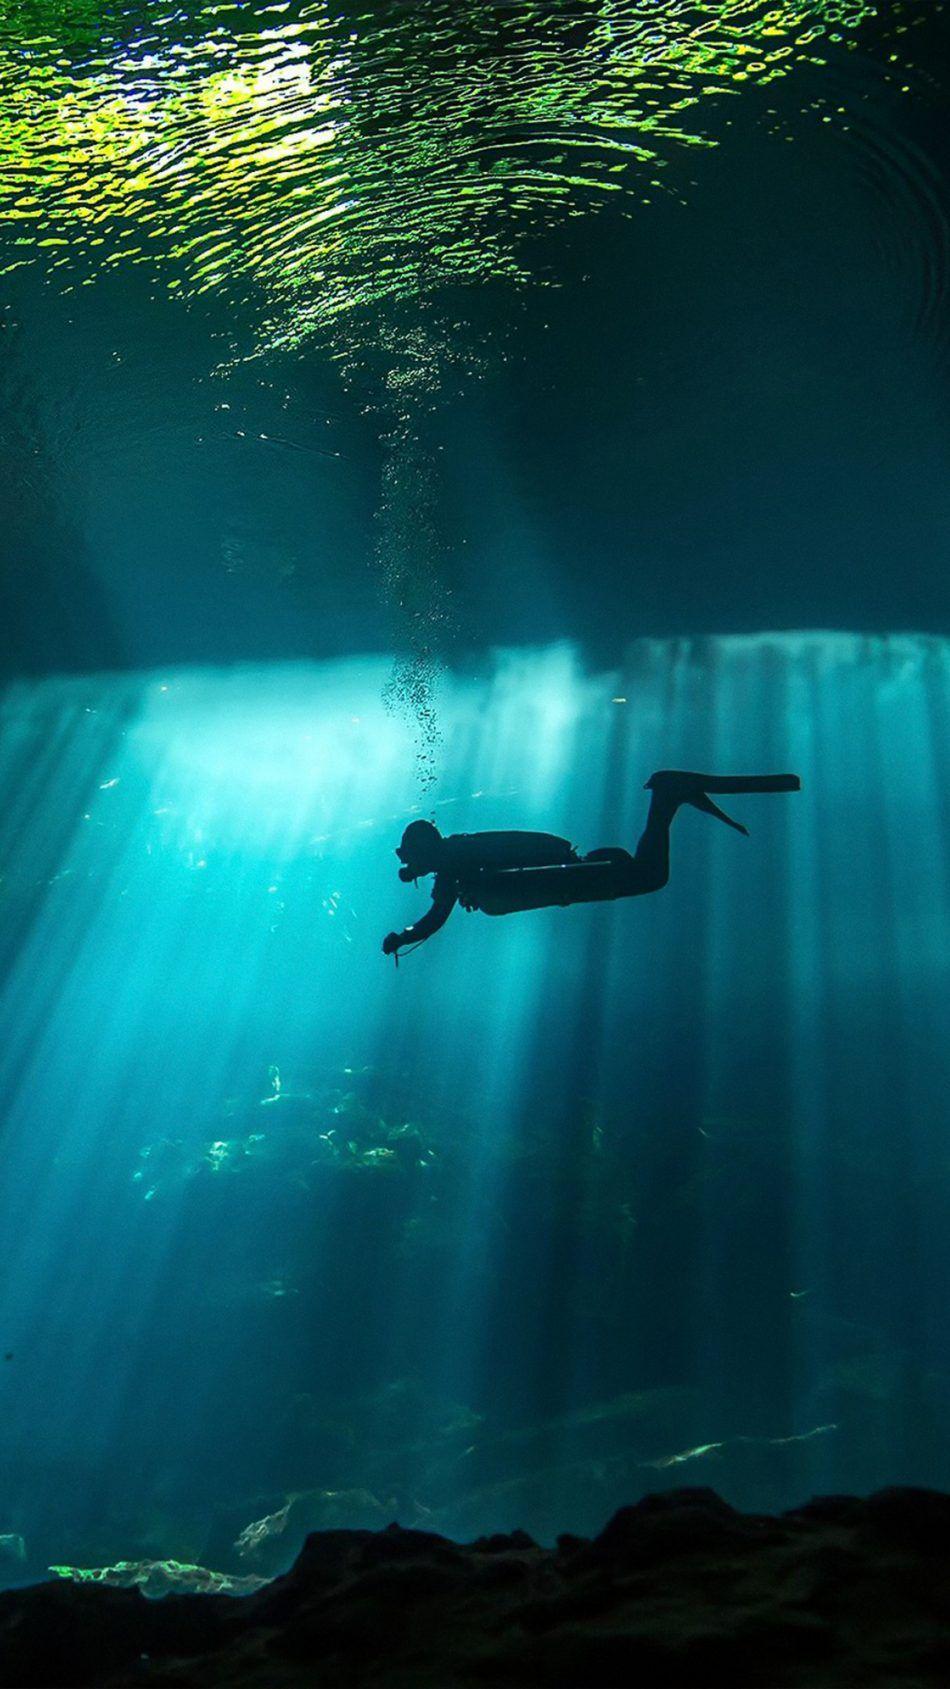 Diver Underwater Sunbeam 4K Ultra HD Mobile Wallpaper. Underwater, Mobile wallpaper, Wallpaper